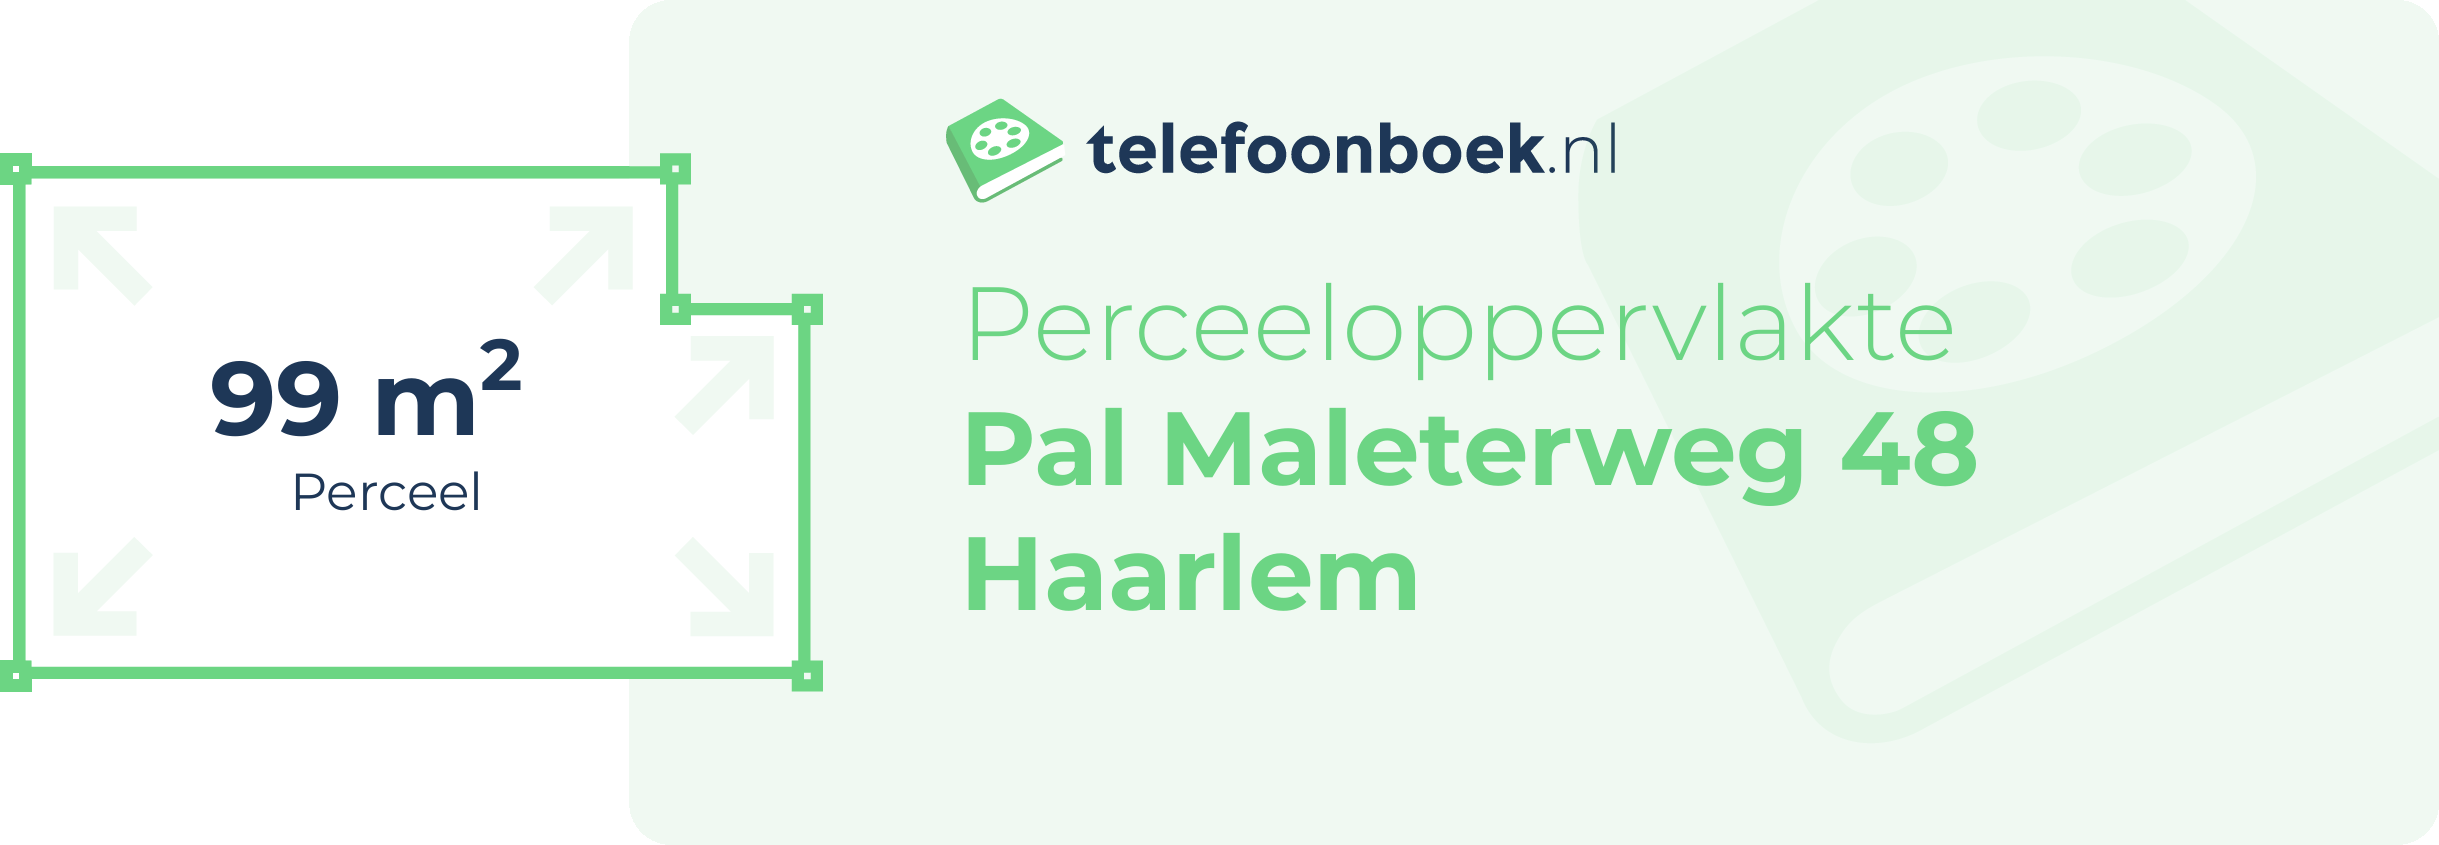 Perceeloppervlakte Pal Maleterweg 48 Haarlem